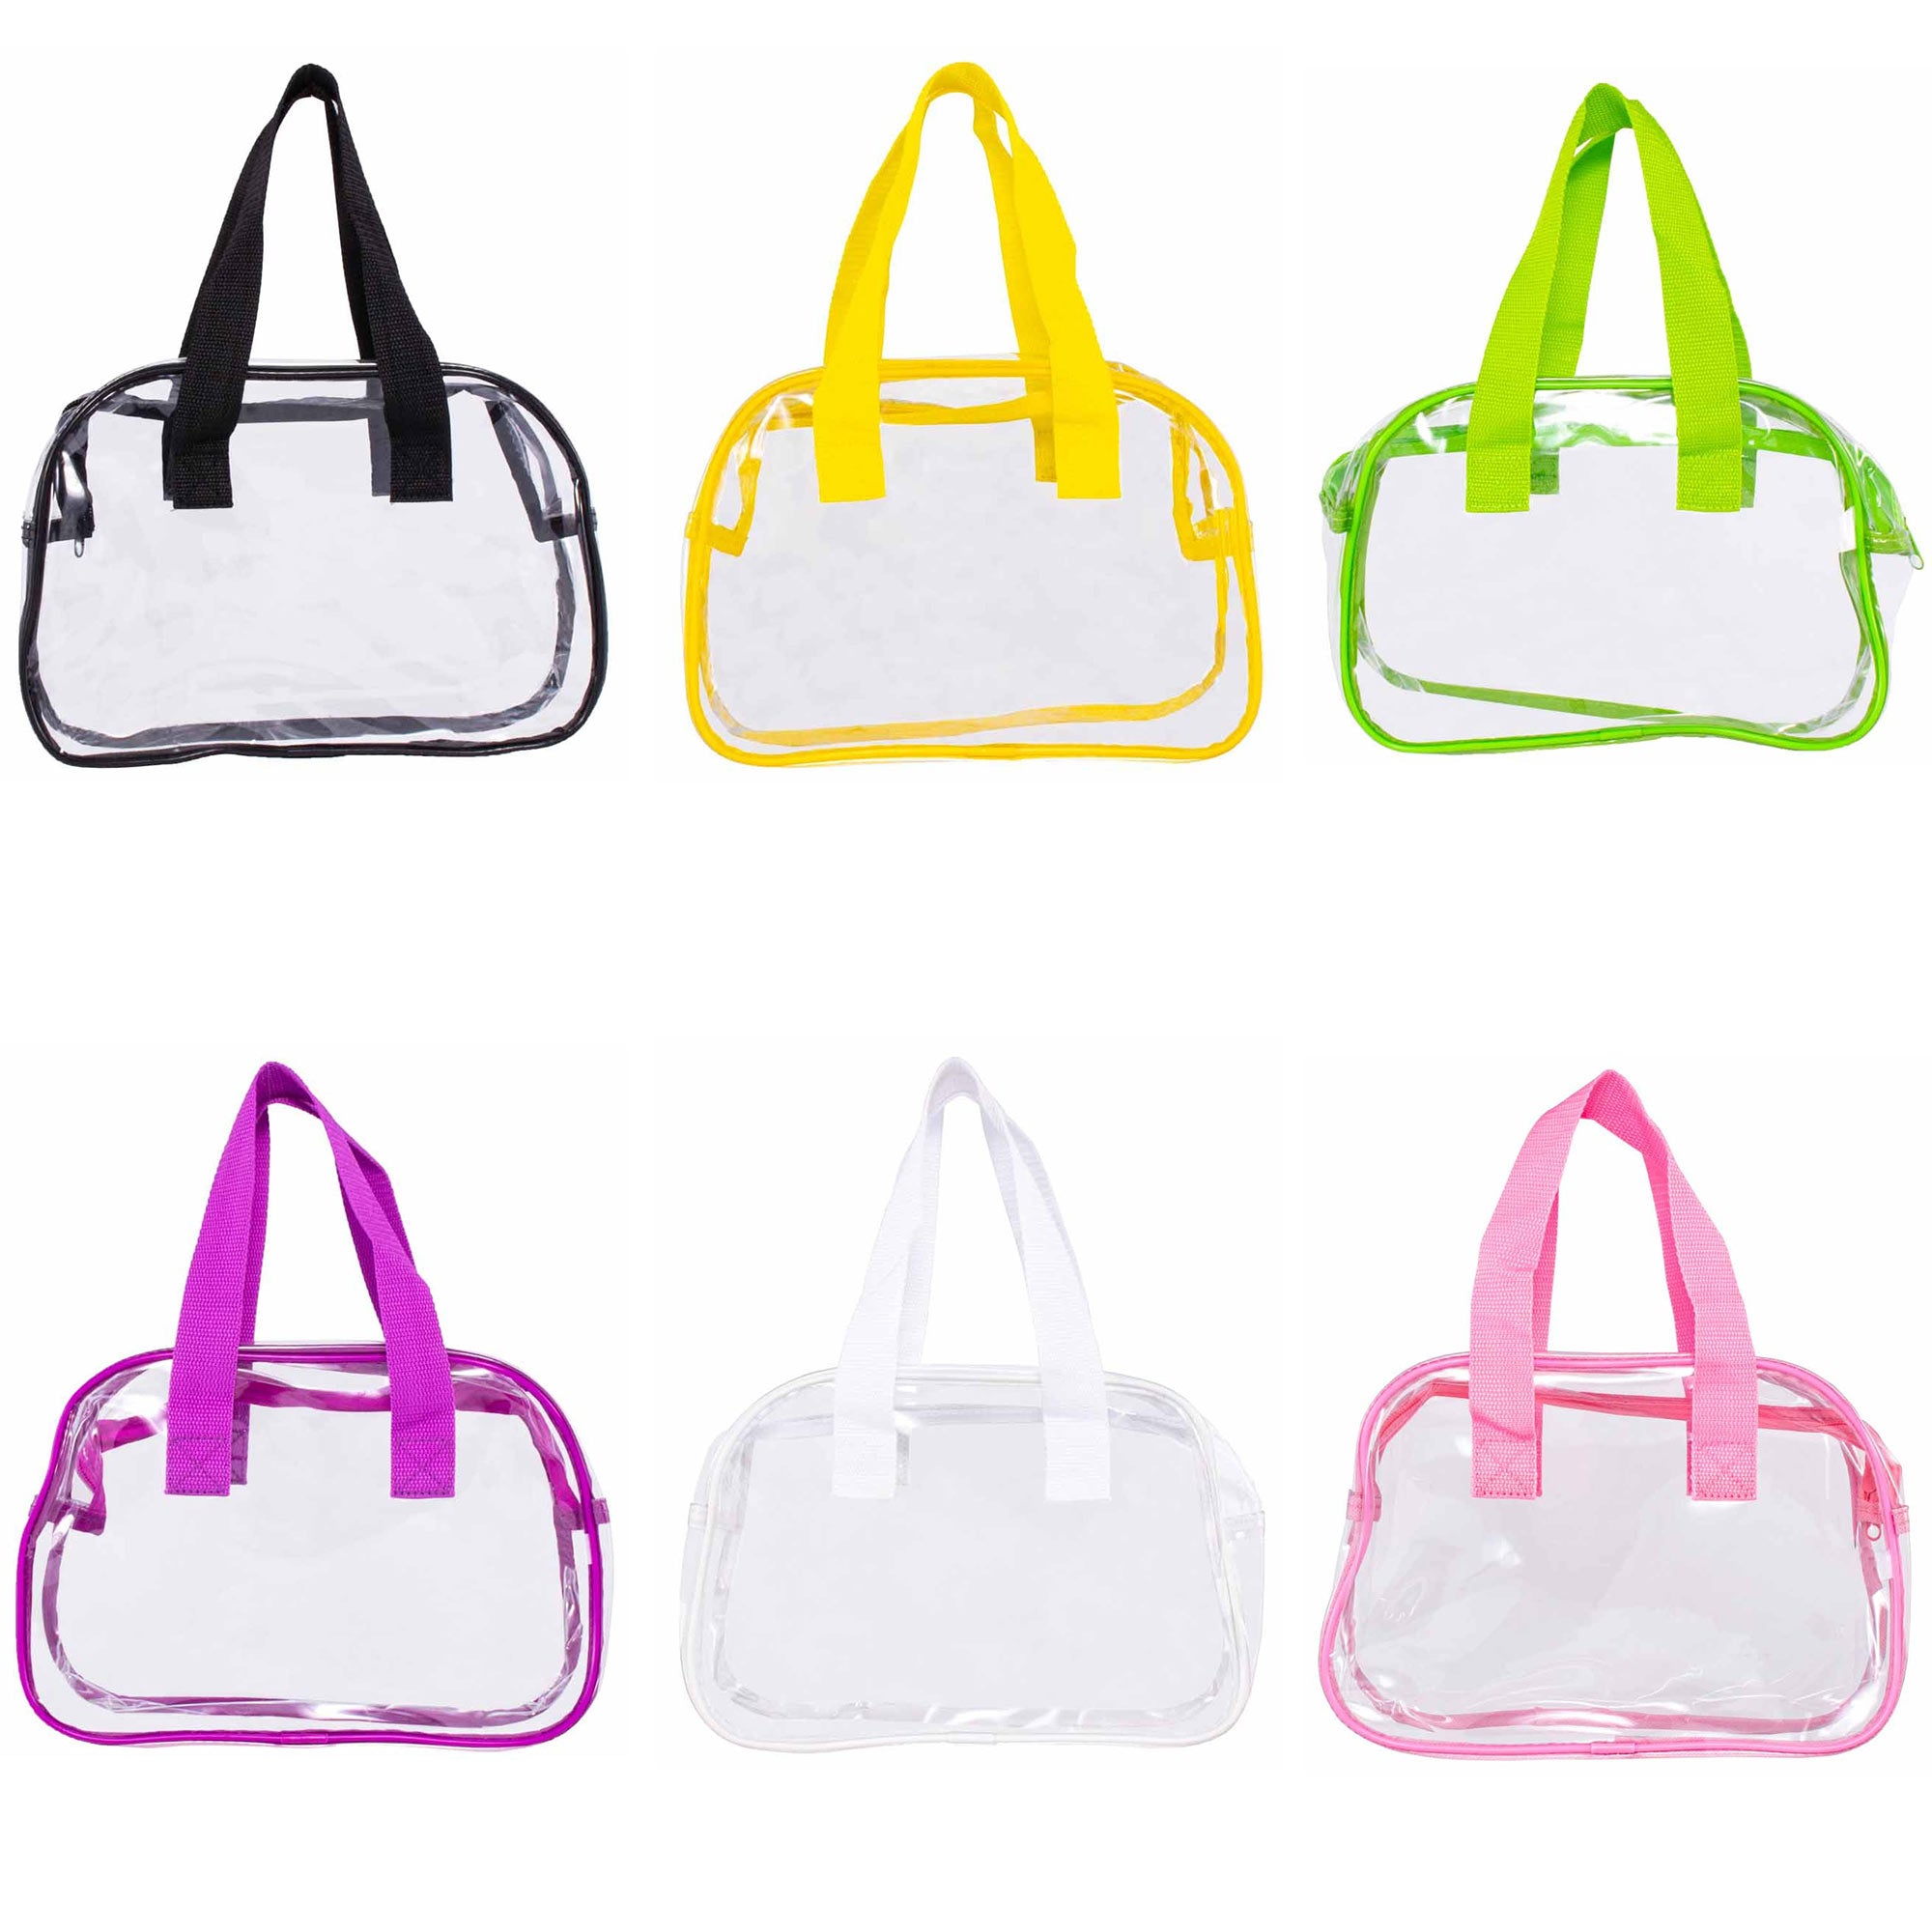 CLEARANCE WHOLESALE CLEAR SATCHEL (CASE OF 24 - $2.50 / PIECE) Wholesale Transparent Bag in Assorted Colors SKU: SATCHEL-24